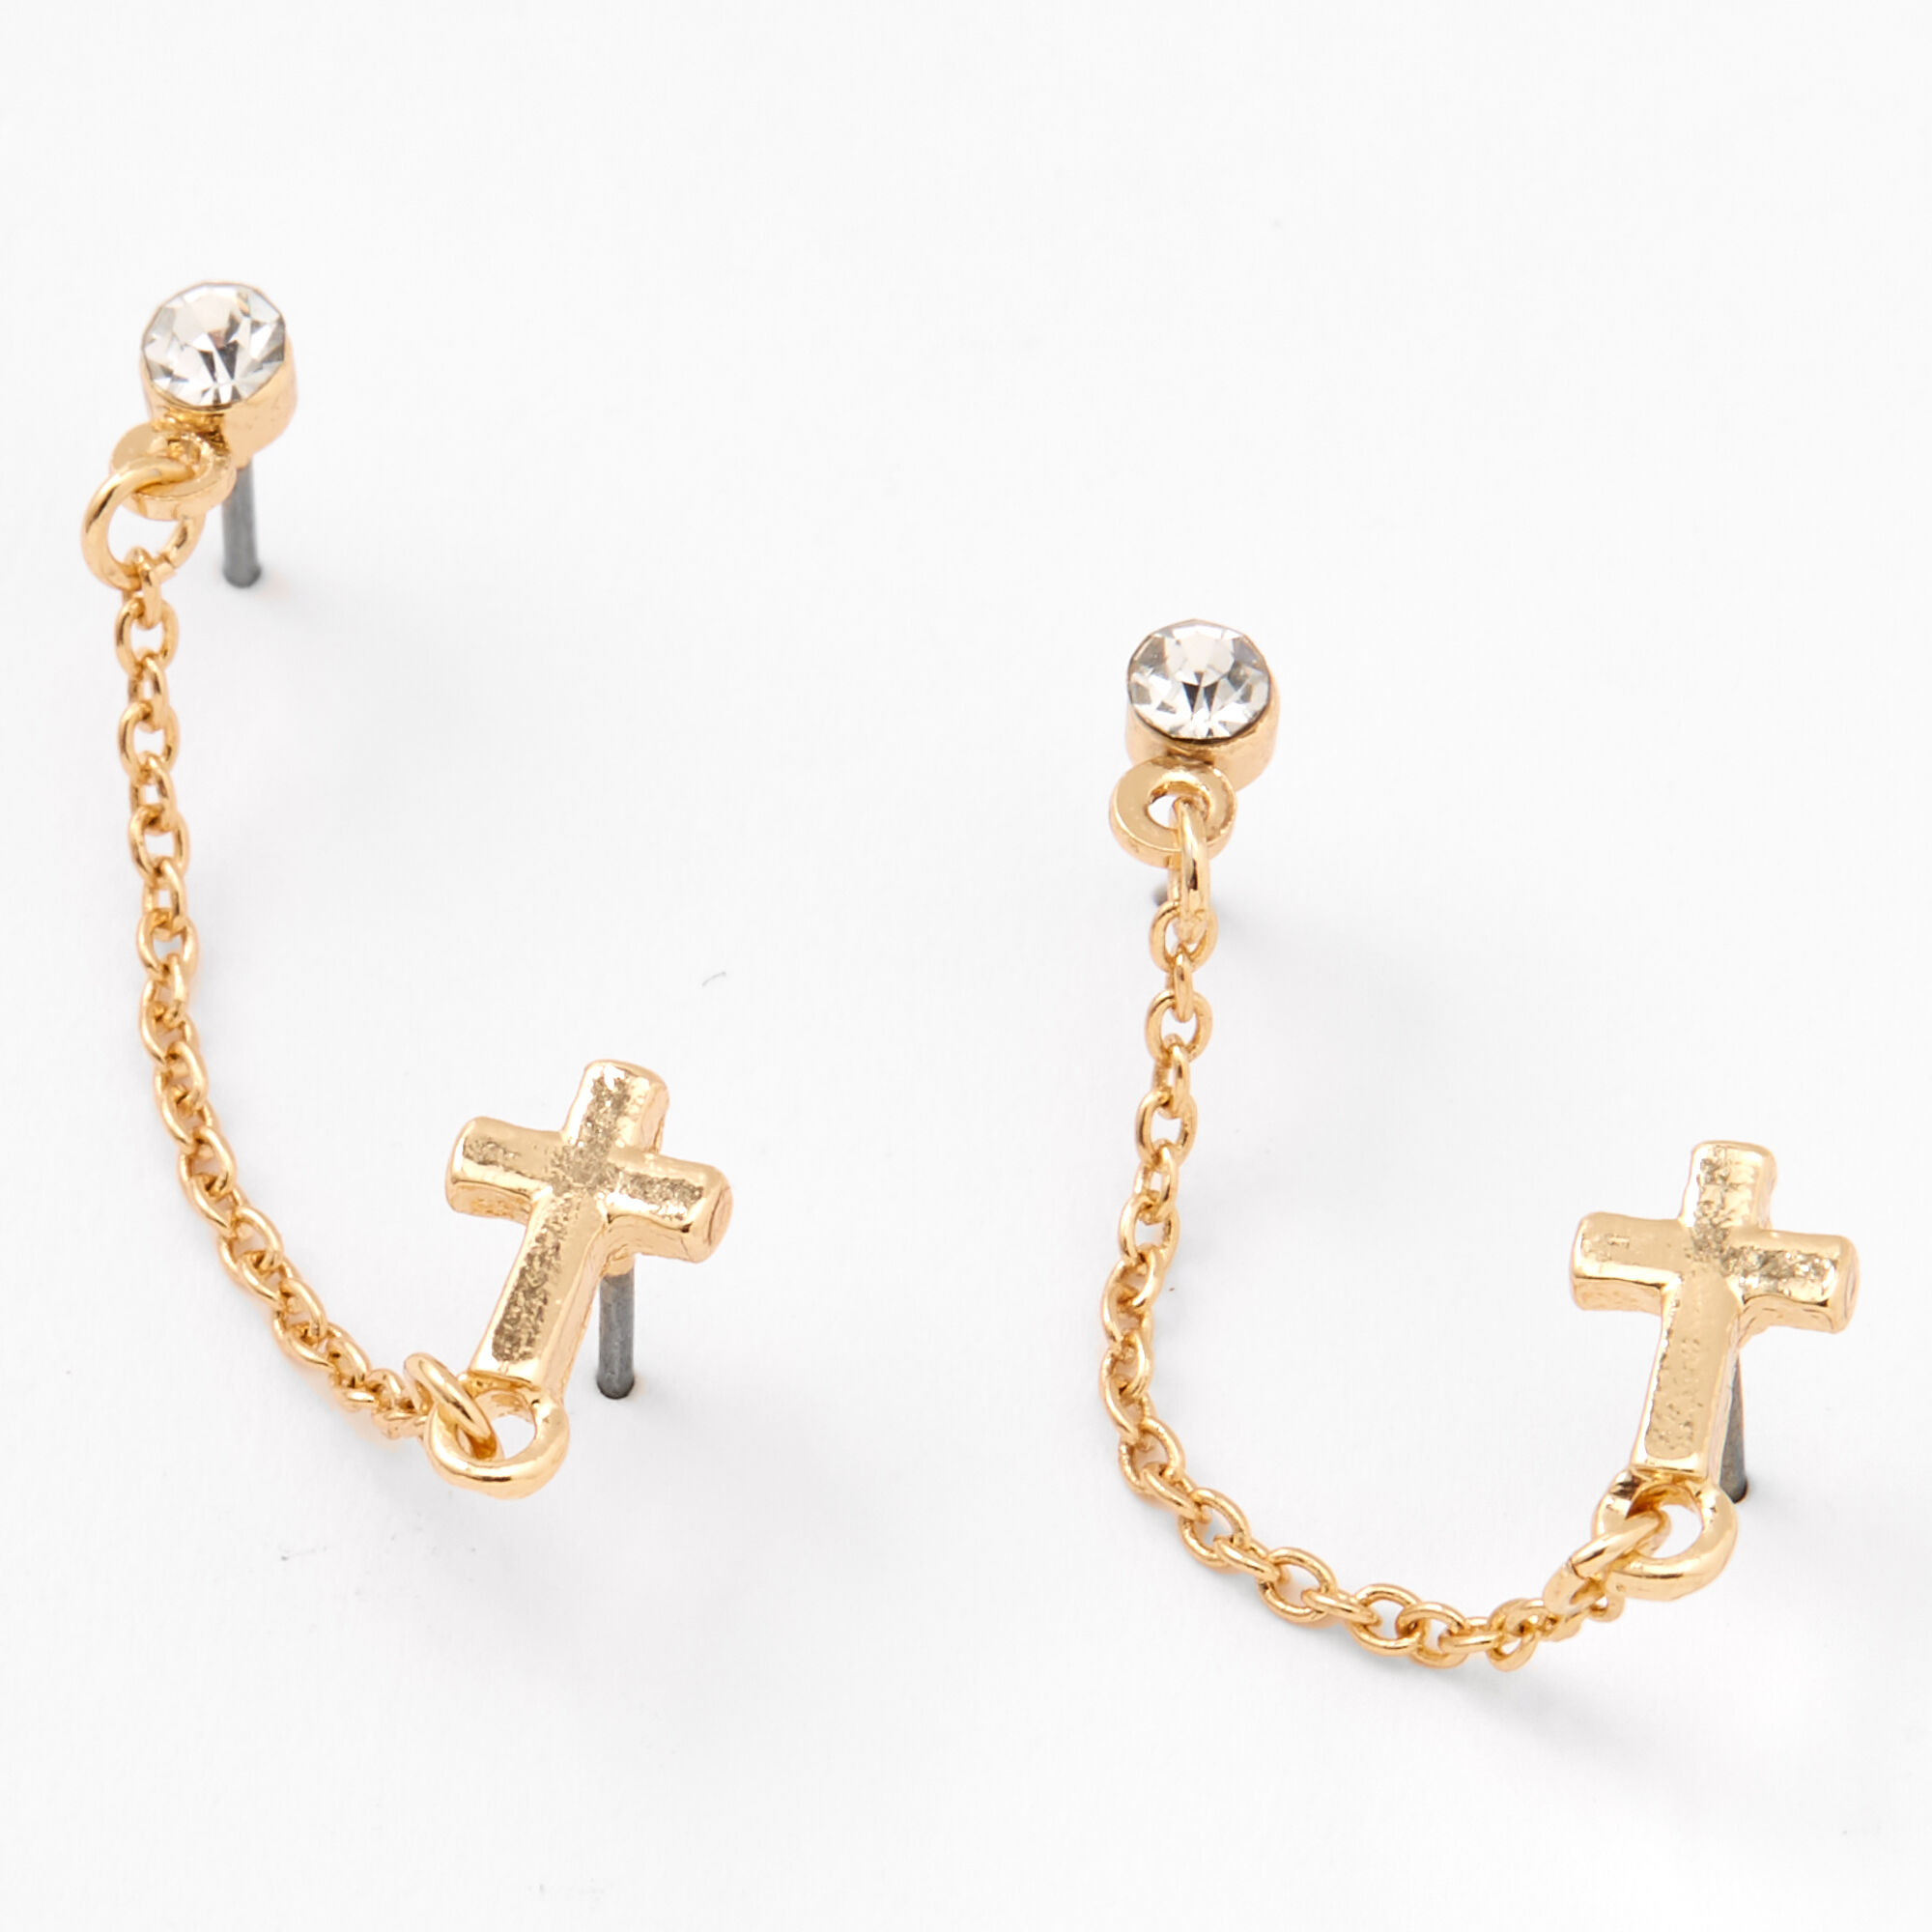 Cross Jewelry Earrings Hot Sale, 51% OFF | campingcanyelles.com